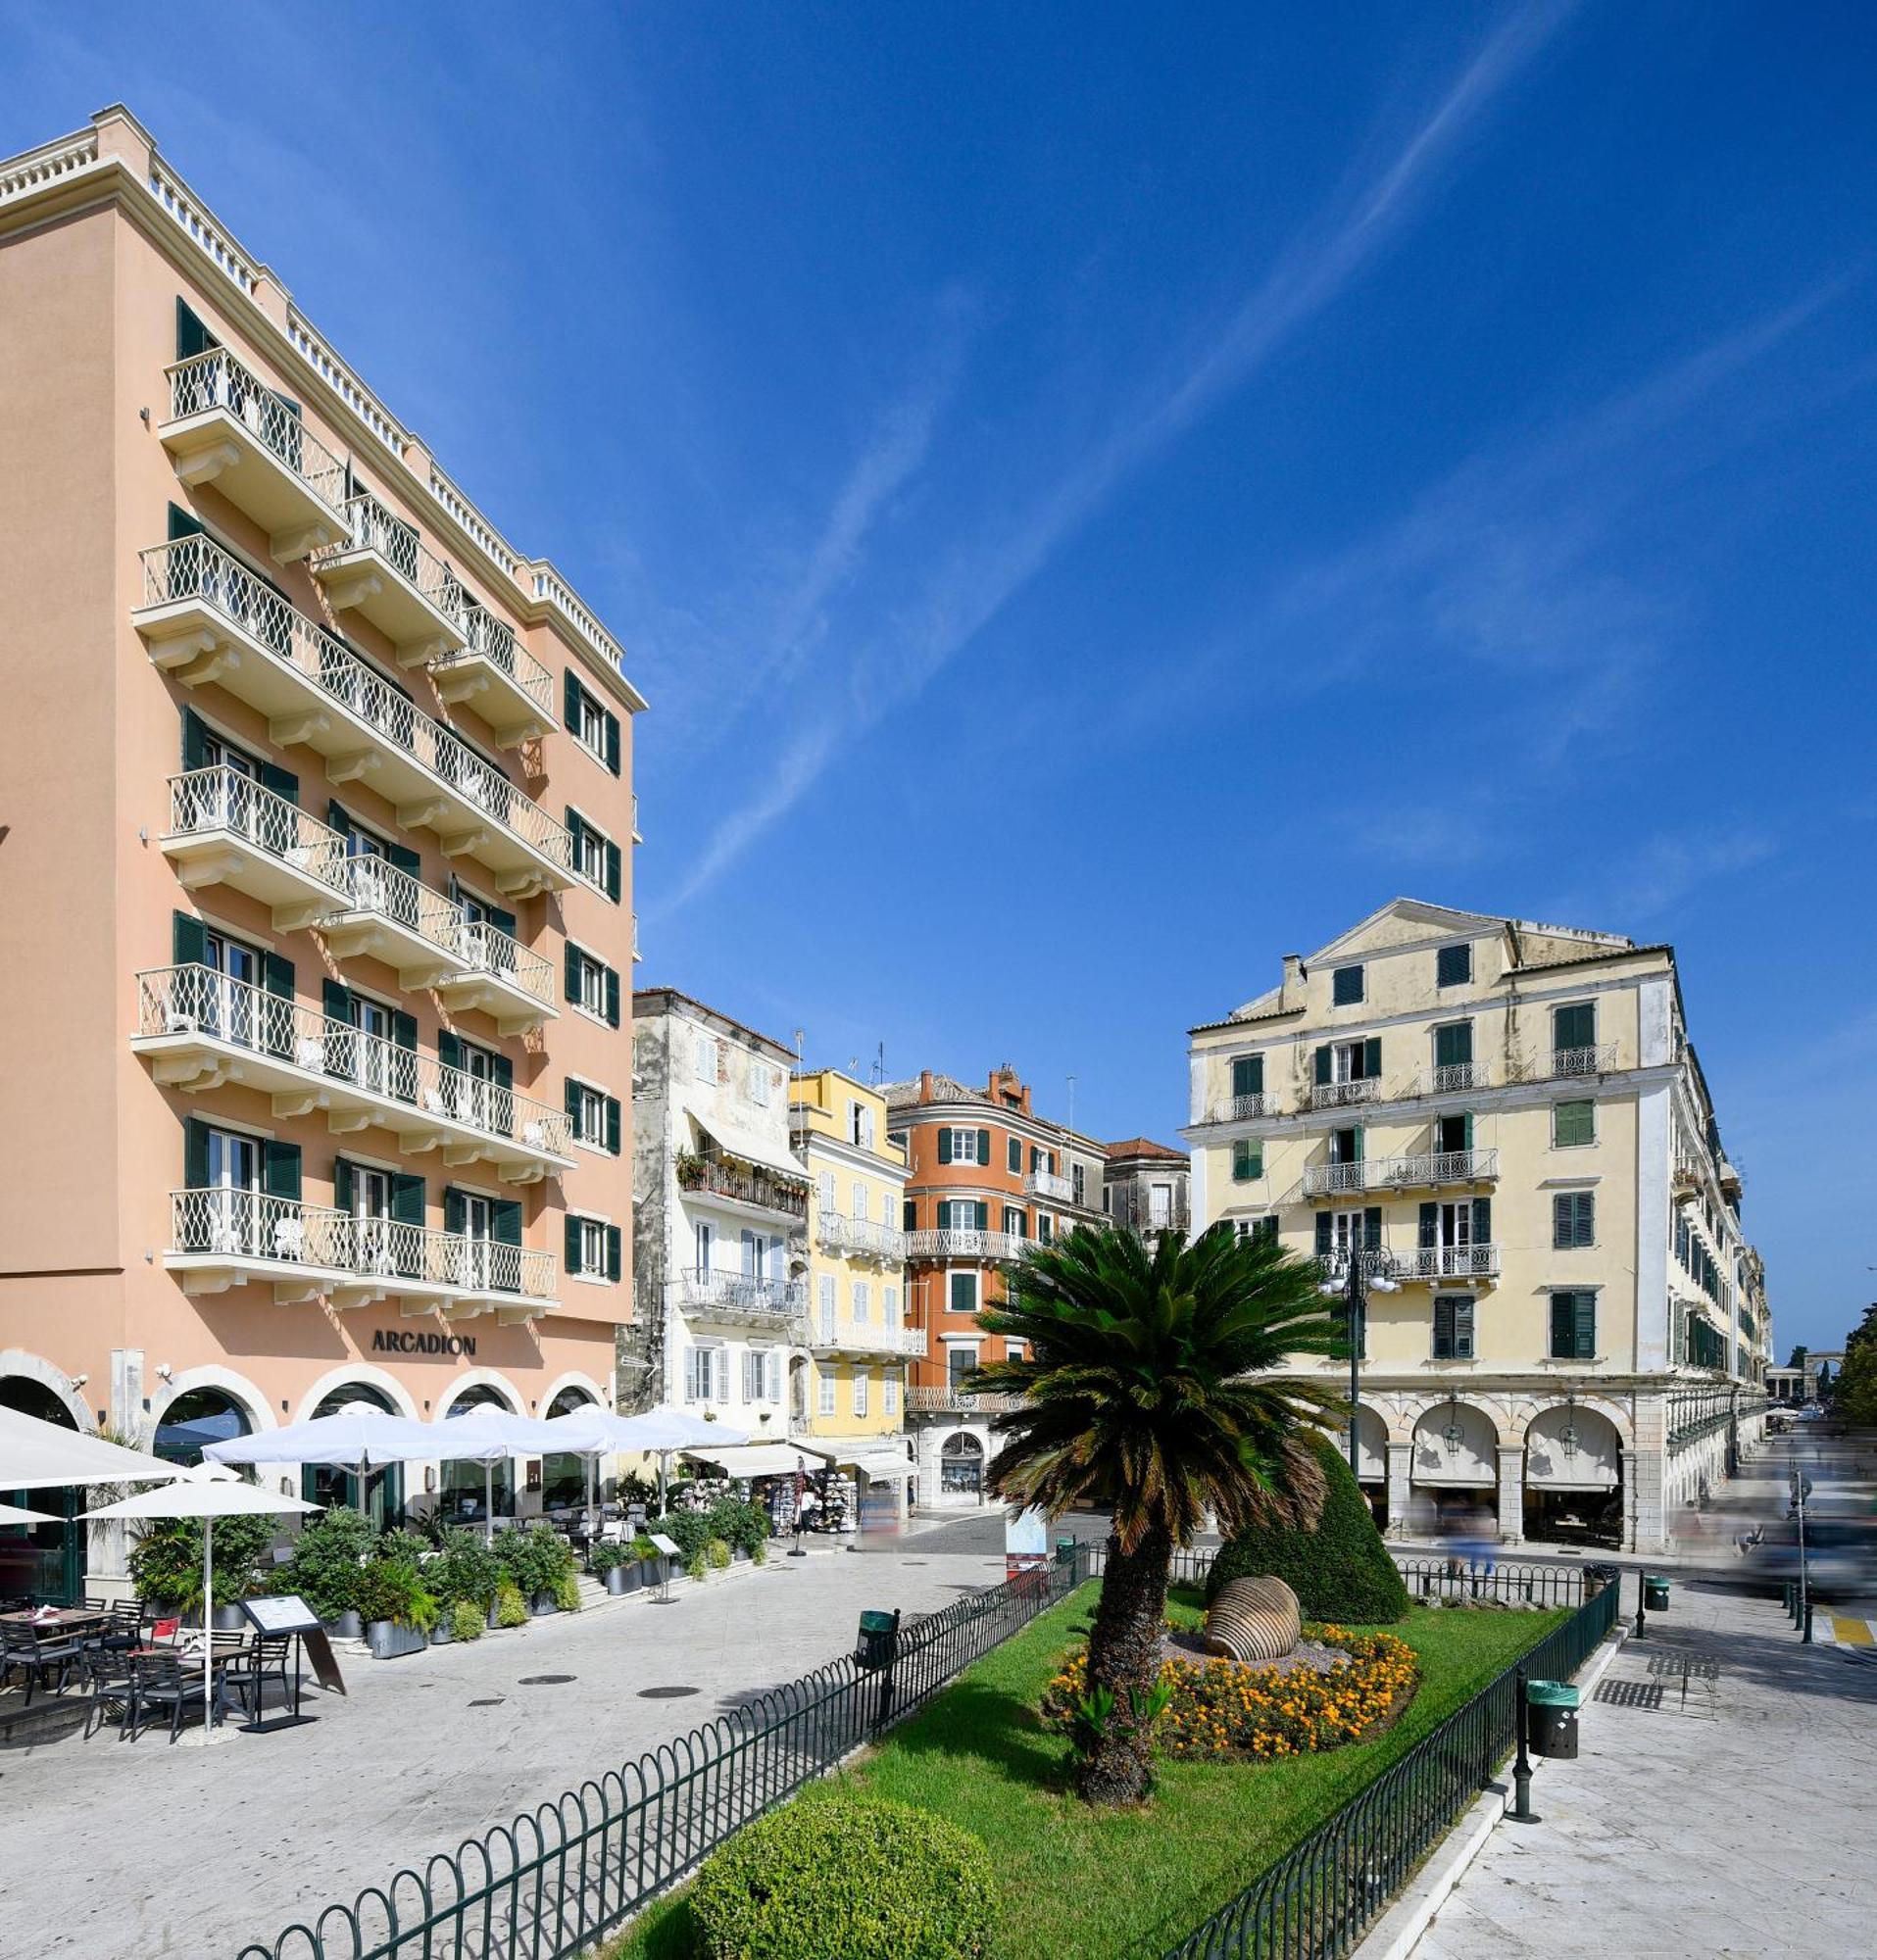 Arcadion Hotel Corfu  외부 사진